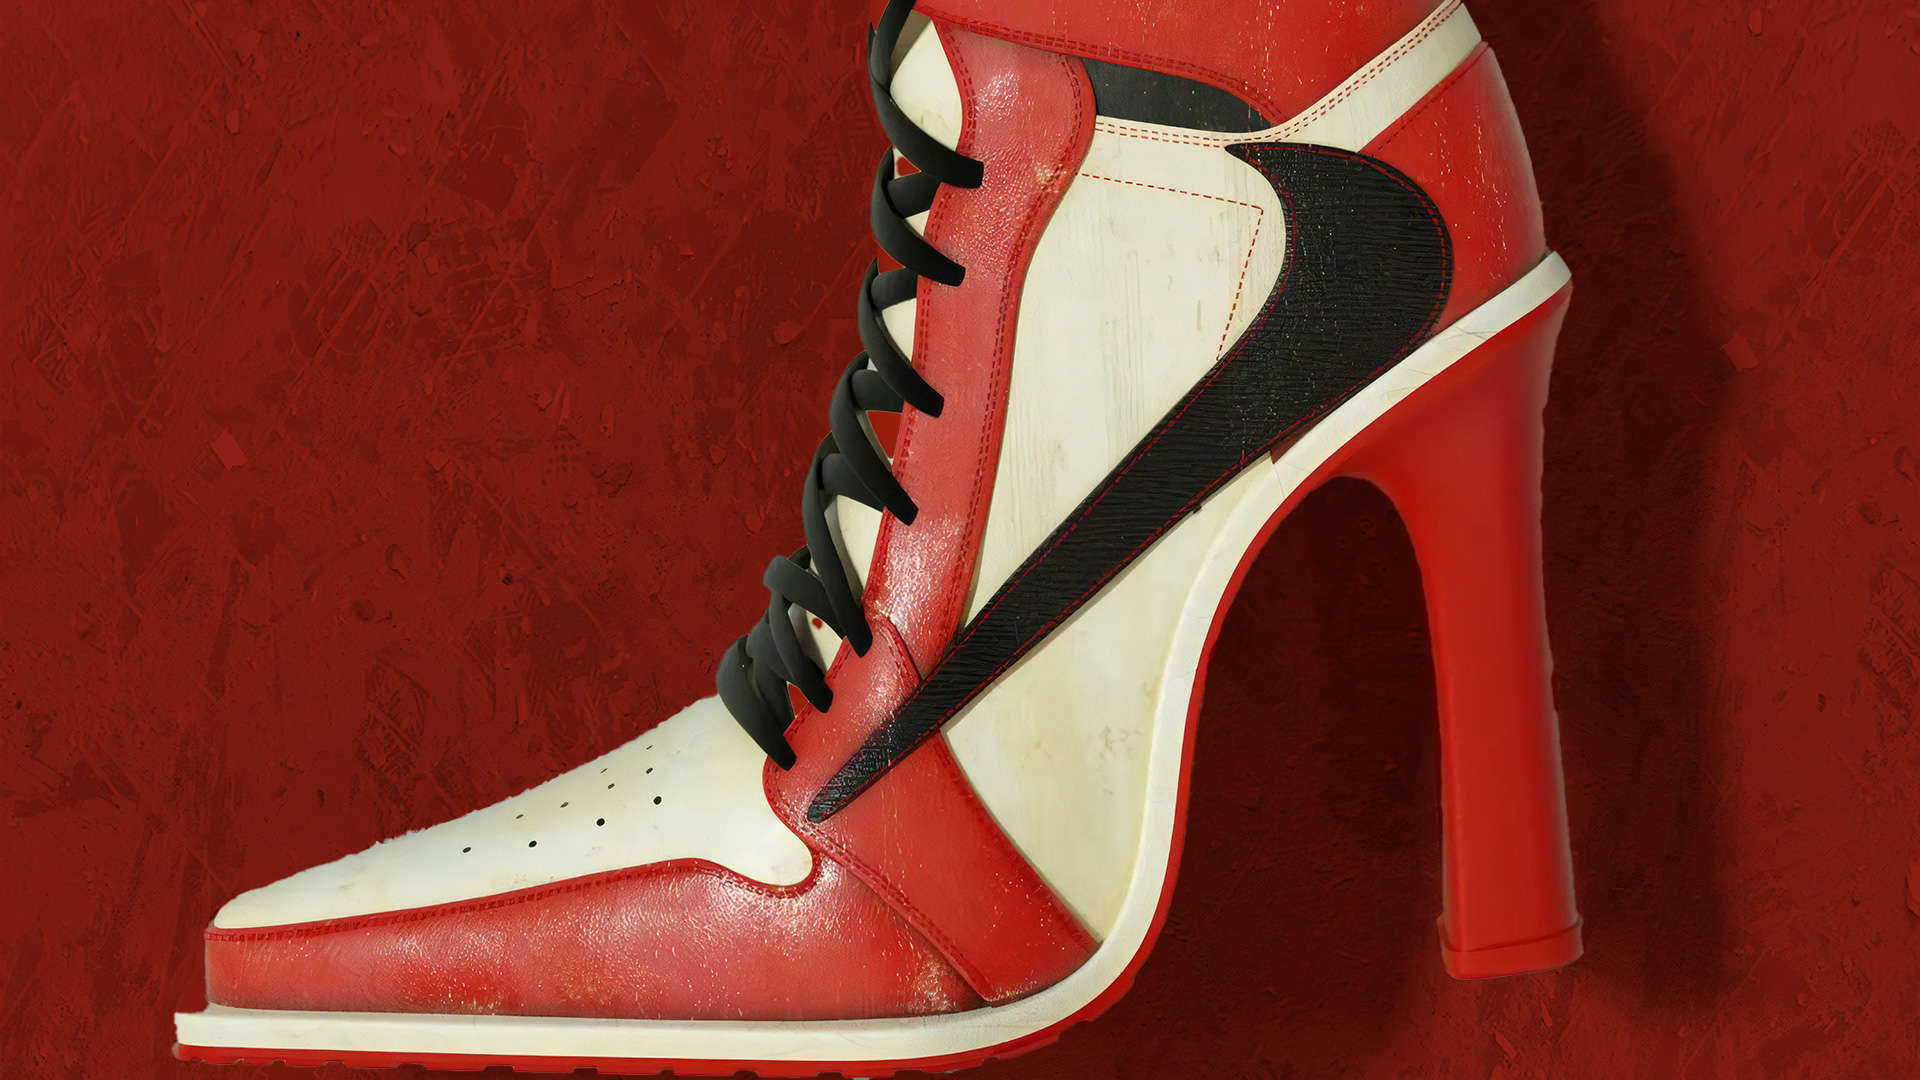 The High Heel Travis Scott x Air Jordan “Chicago” Boots You Need